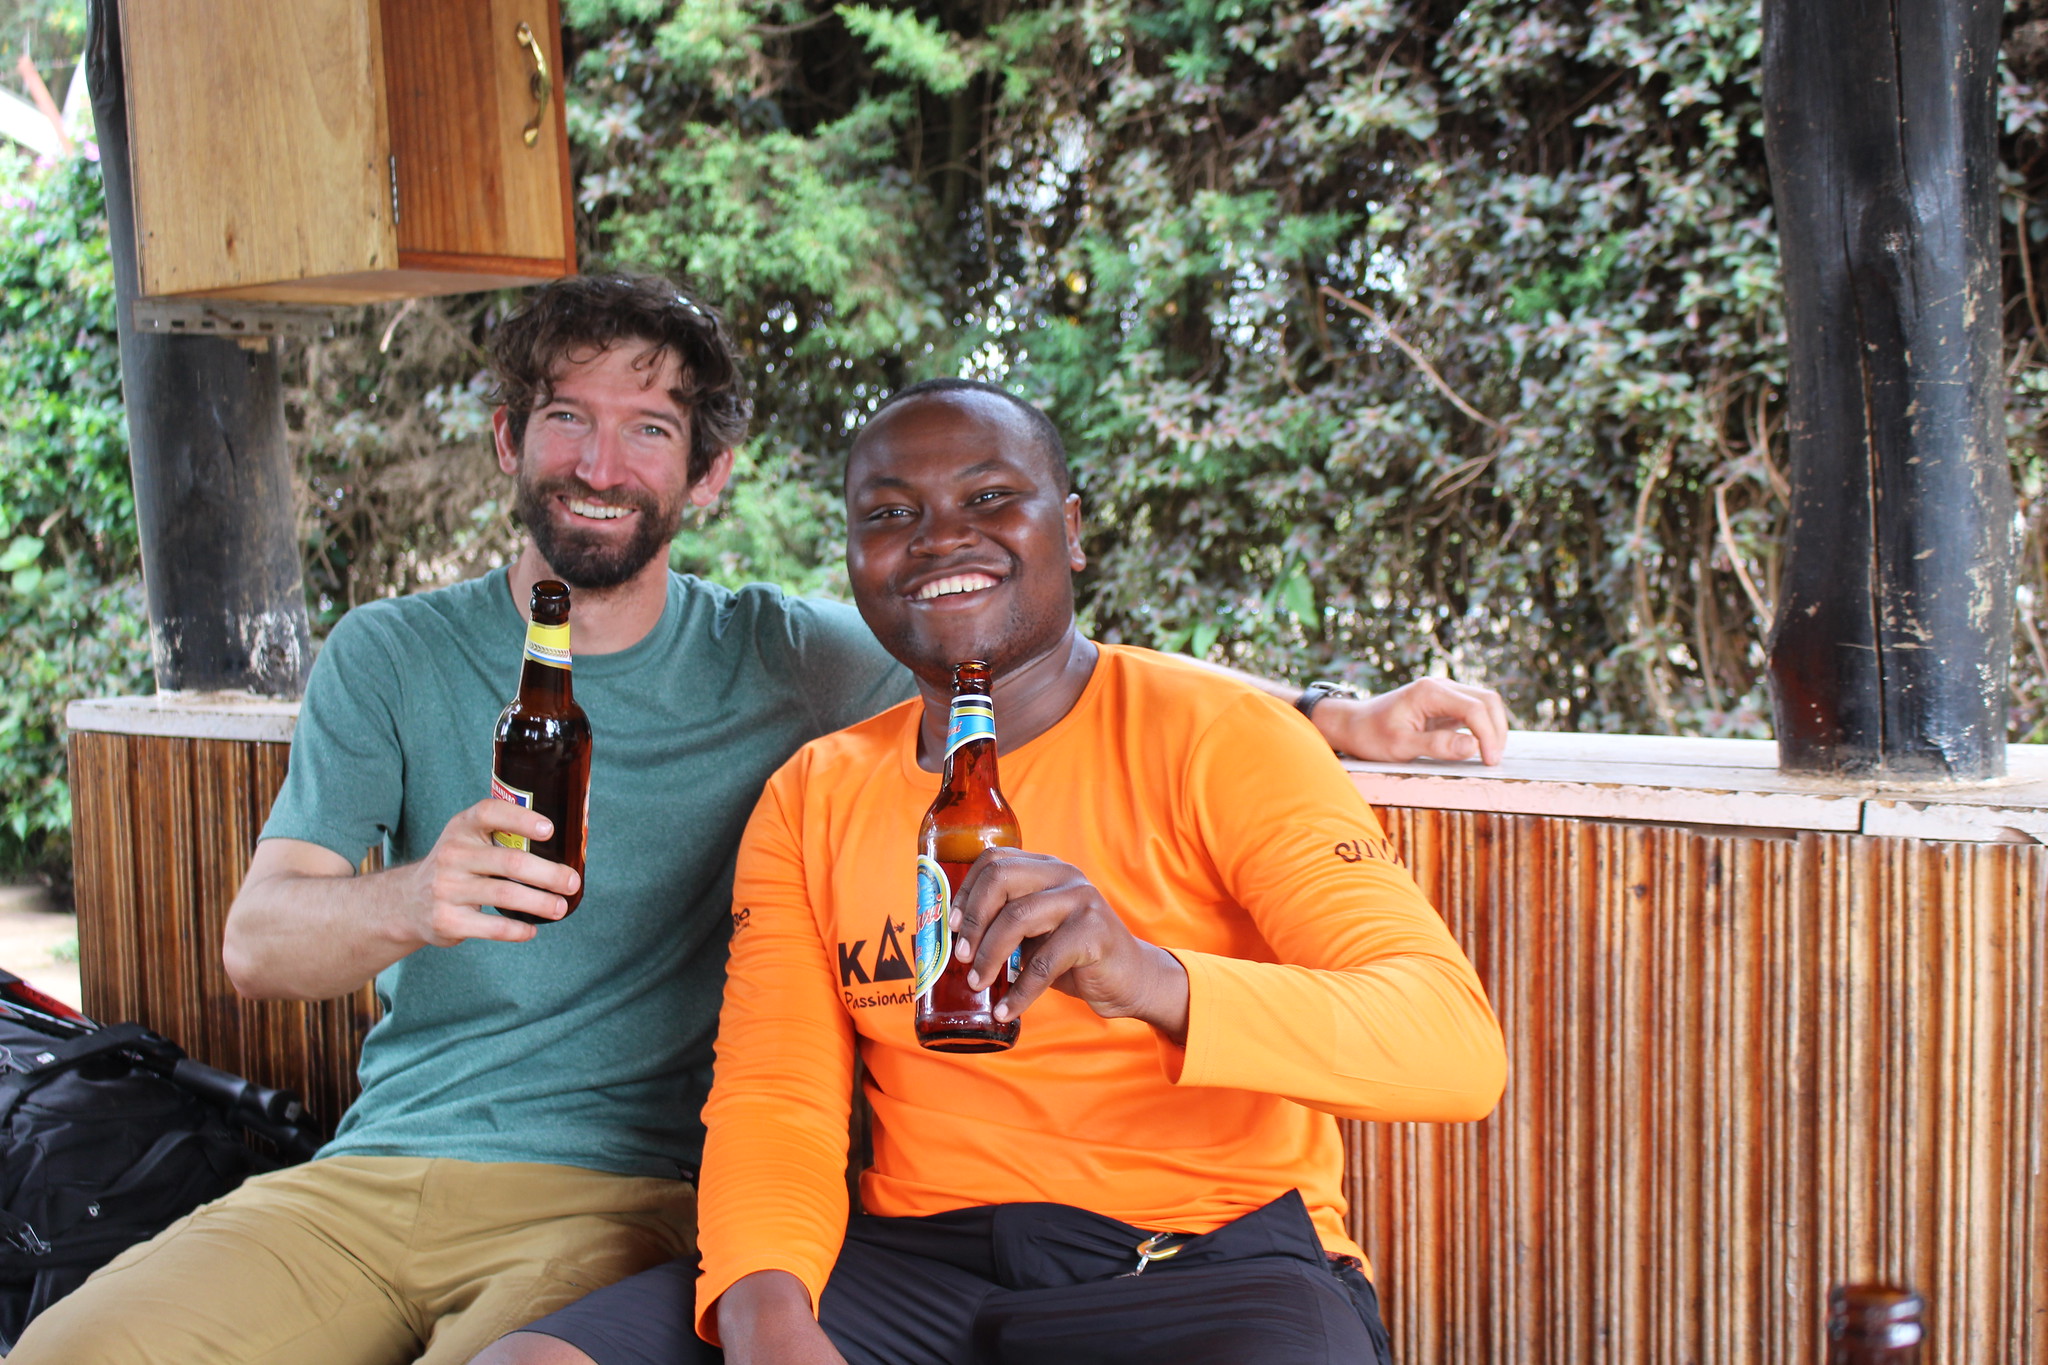 Having beer at Kilimanjaro gate